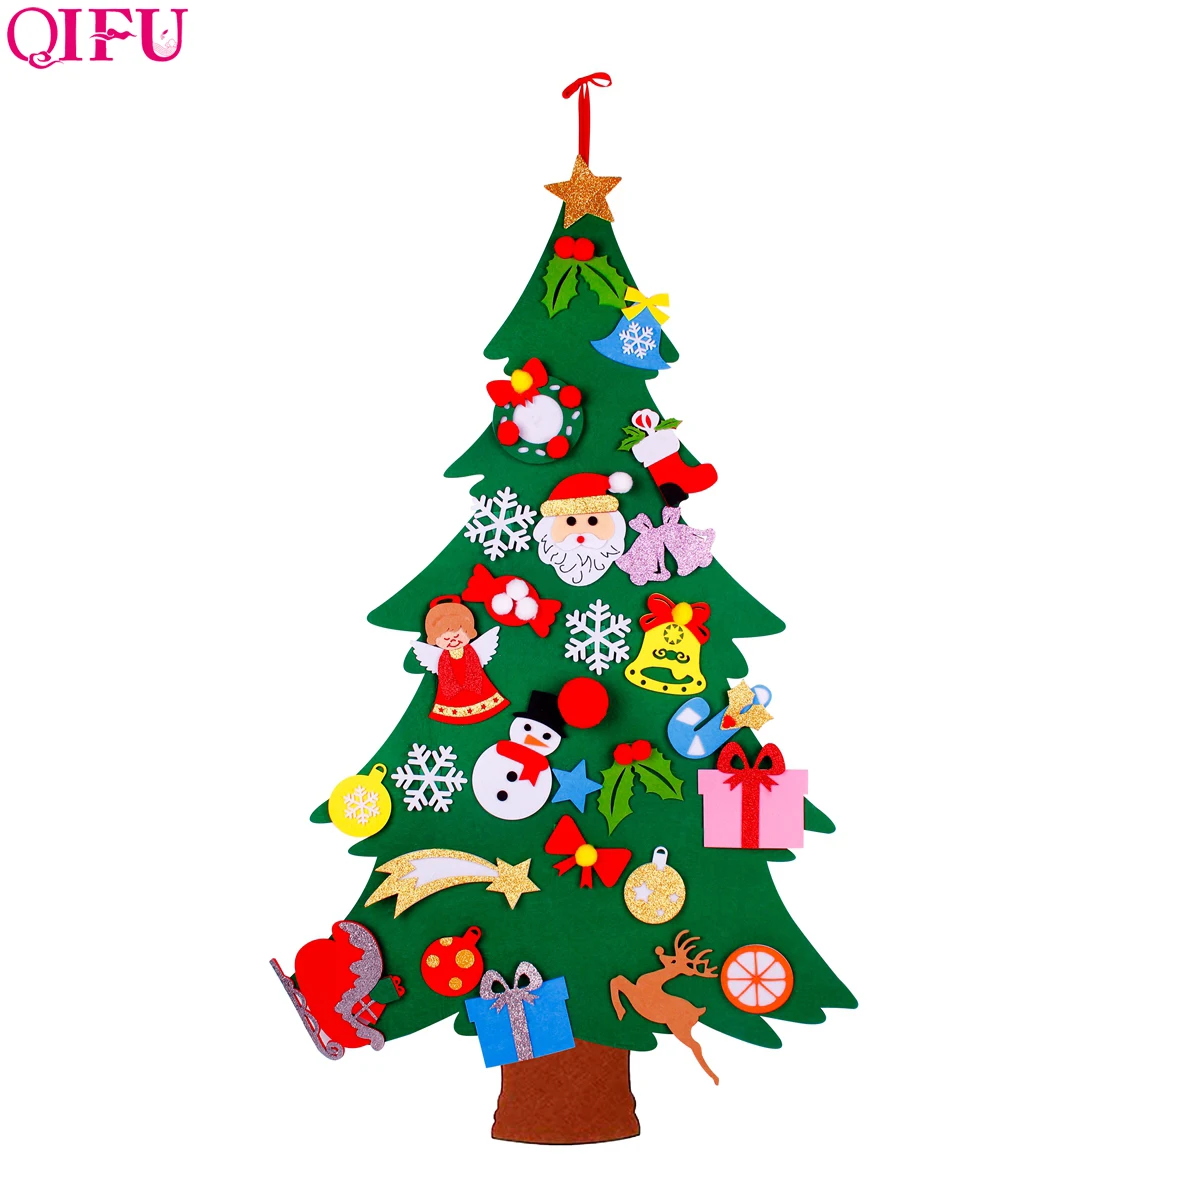 QIFU 3D DIY Felt Christmas Tree Christmas Decor for Home Artificial Christmas Tree Xmas Gifts New Year Navidad Natal